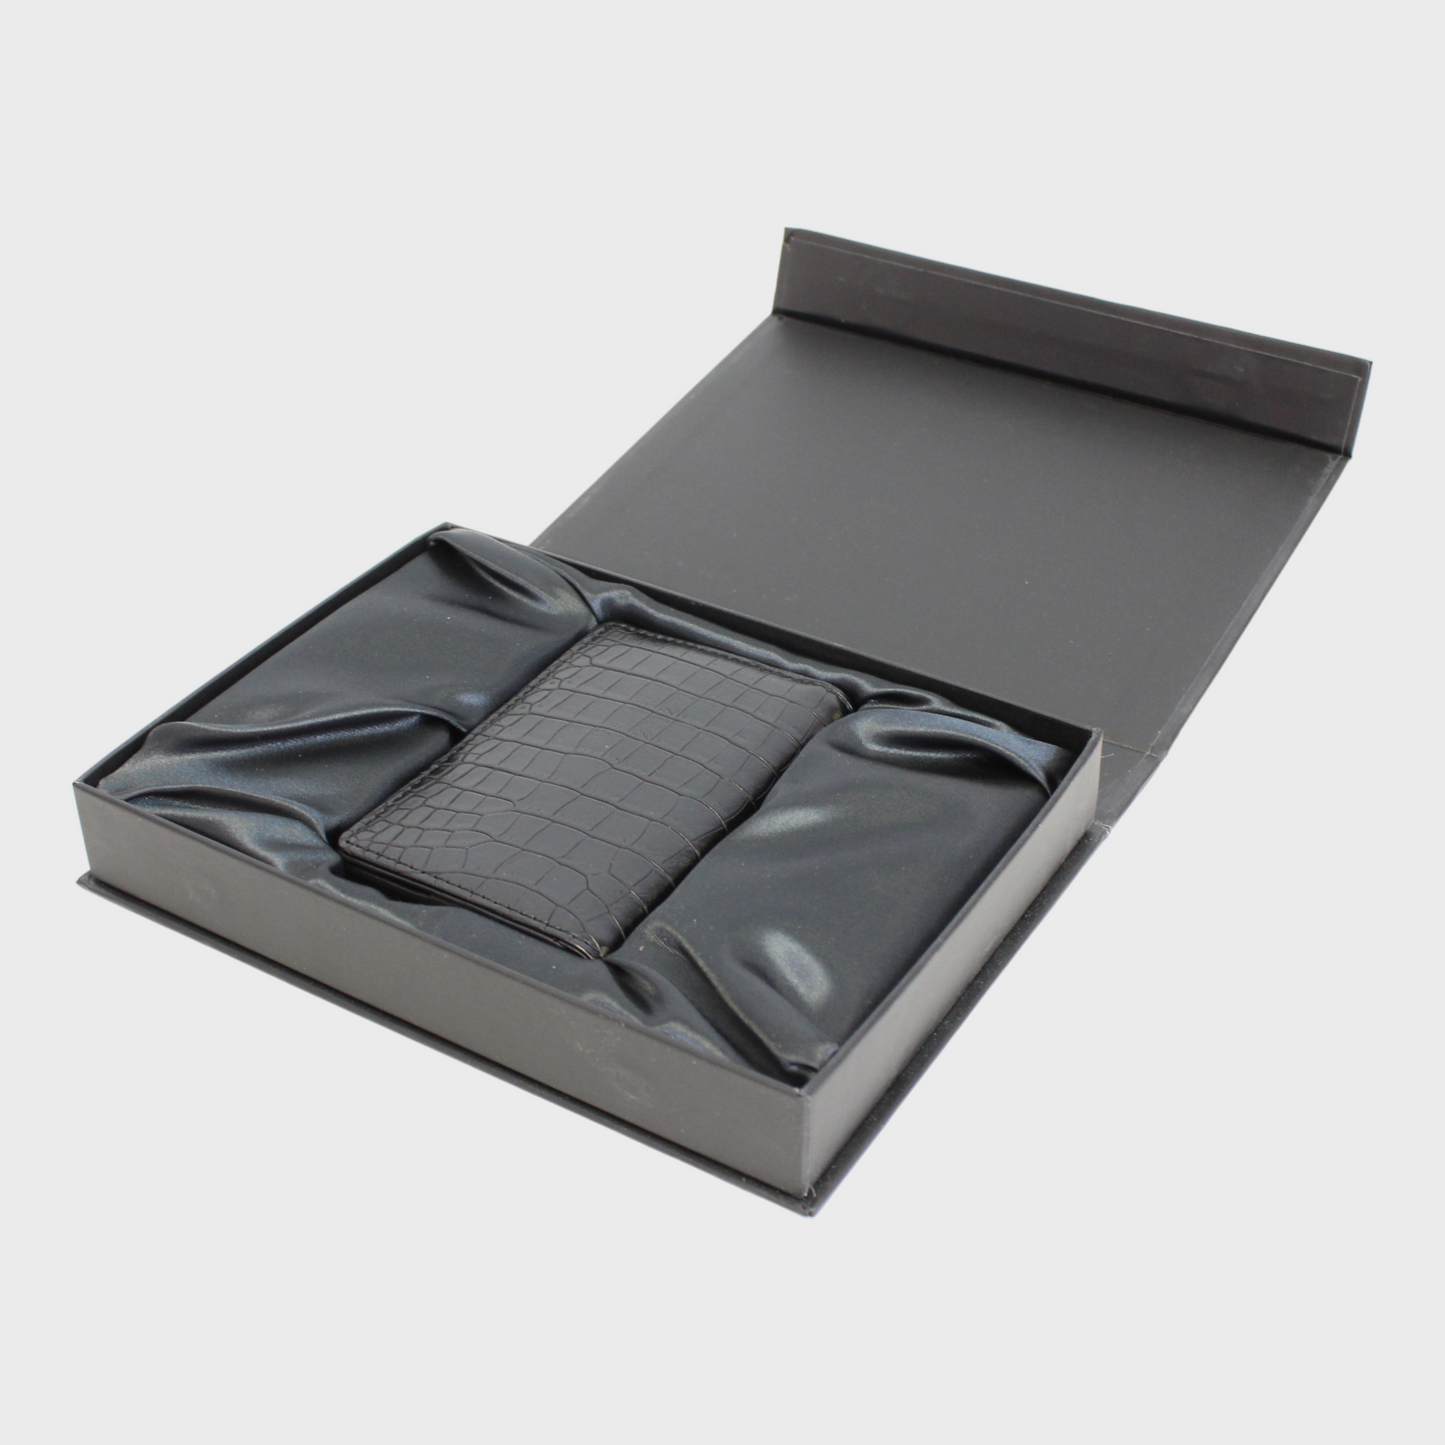 Saetti Luxury Leather Wallet Cardholder